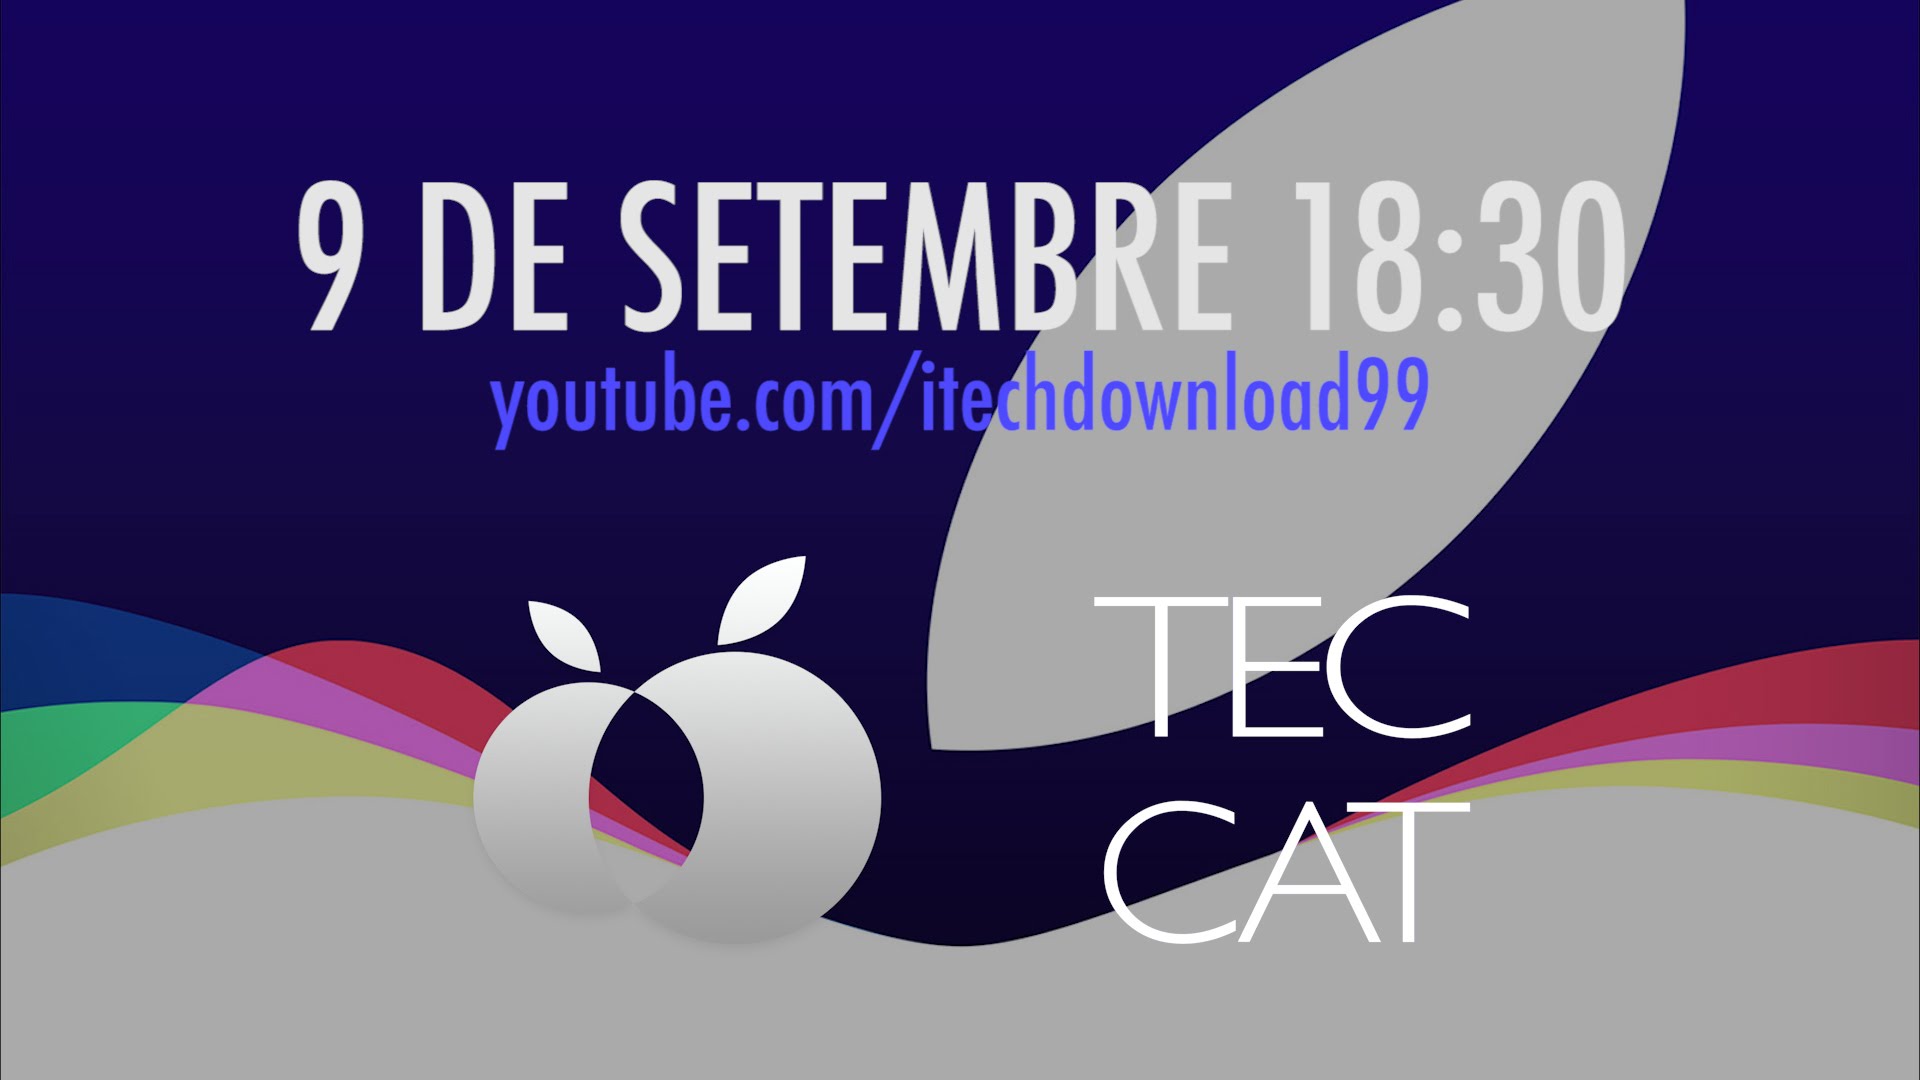 Directe Apple Keynote 9-9-15 de TecCatalà